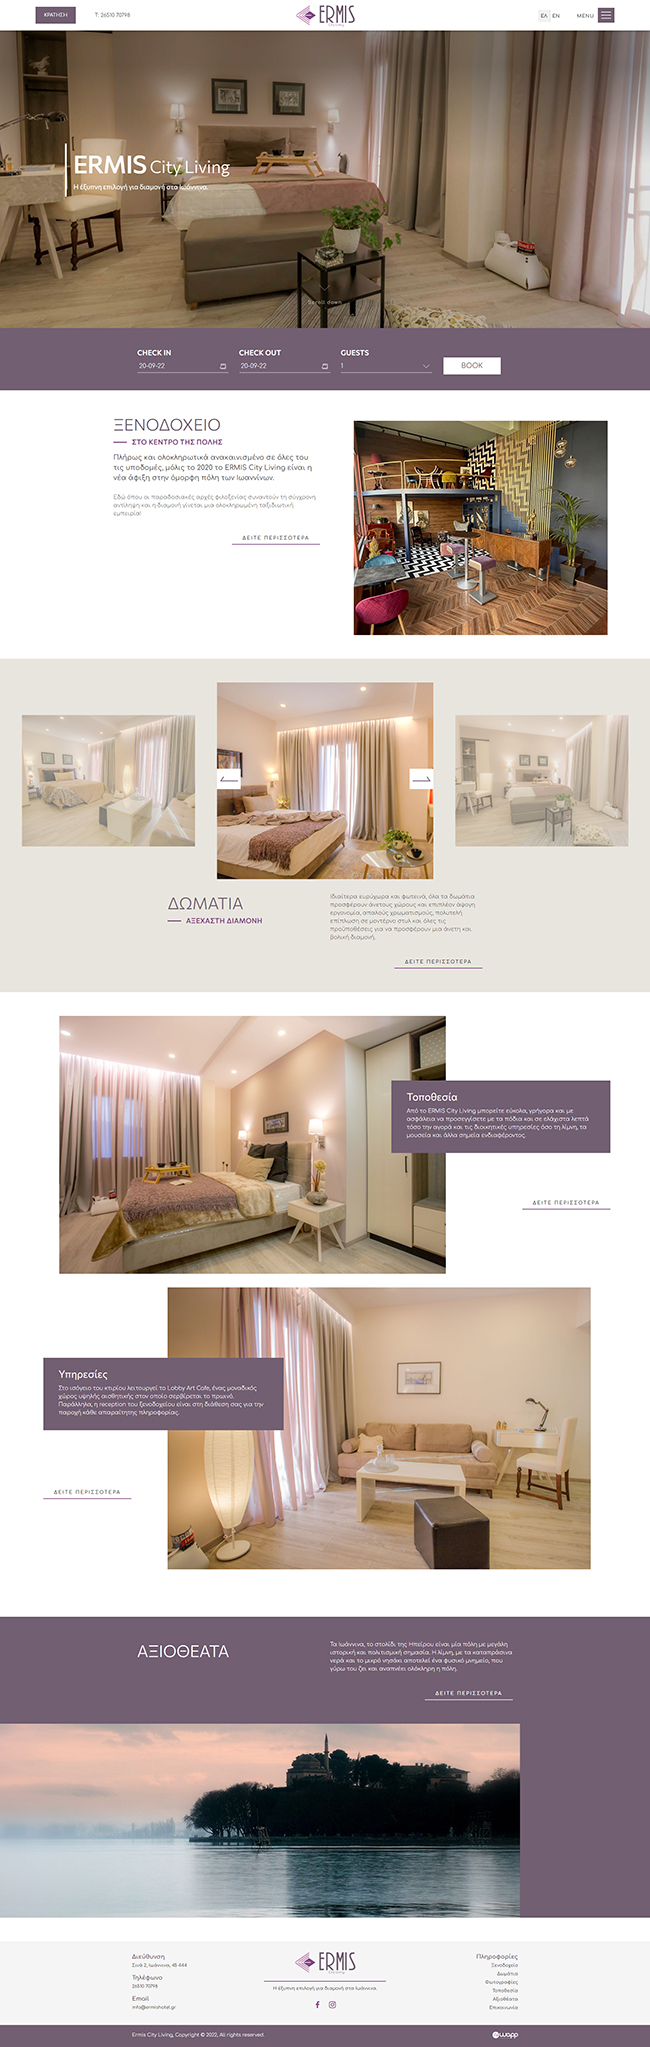 Responsive website for Ermis Hotel in Ioannina.